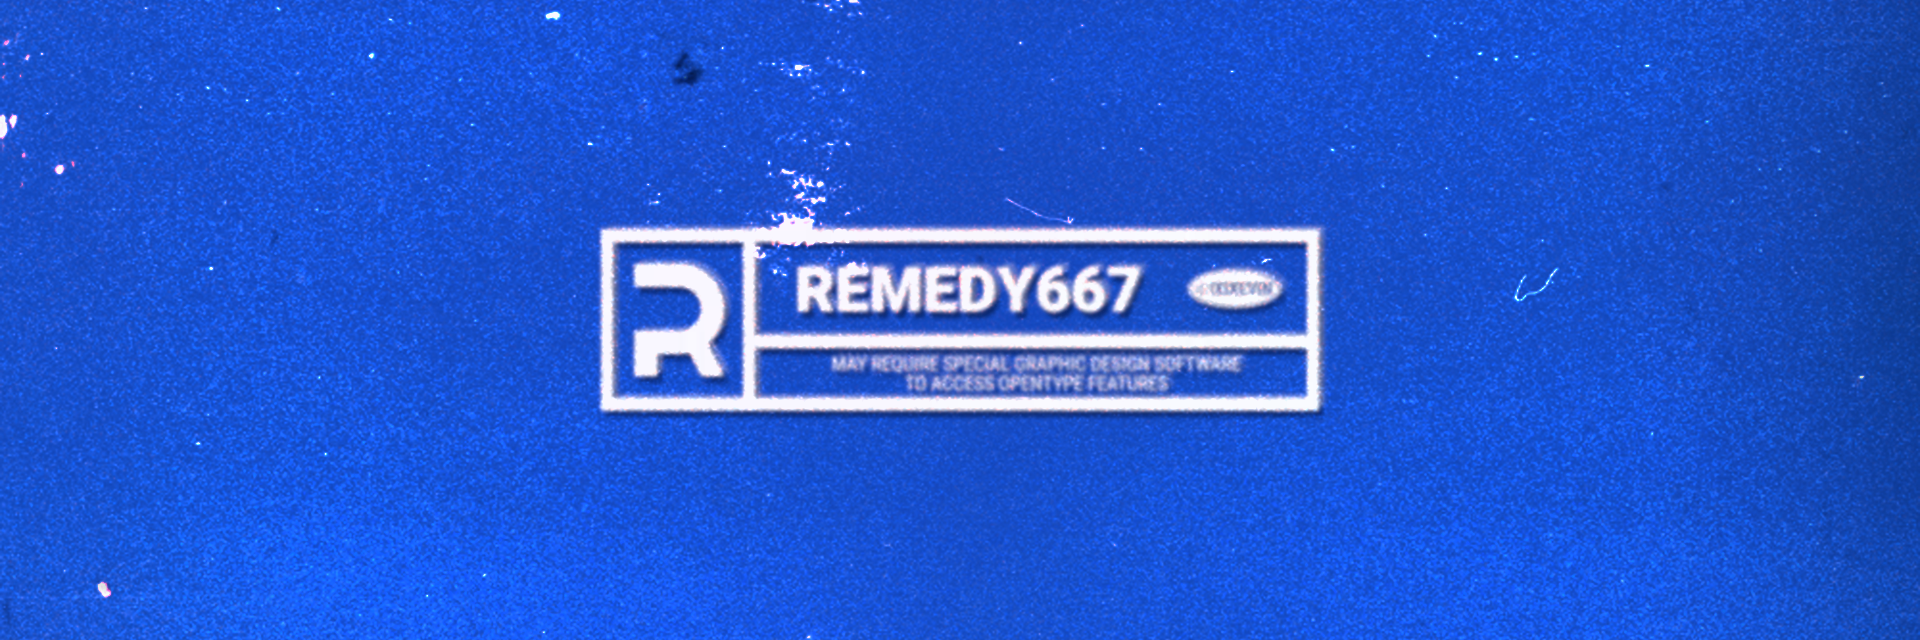 Remedy667